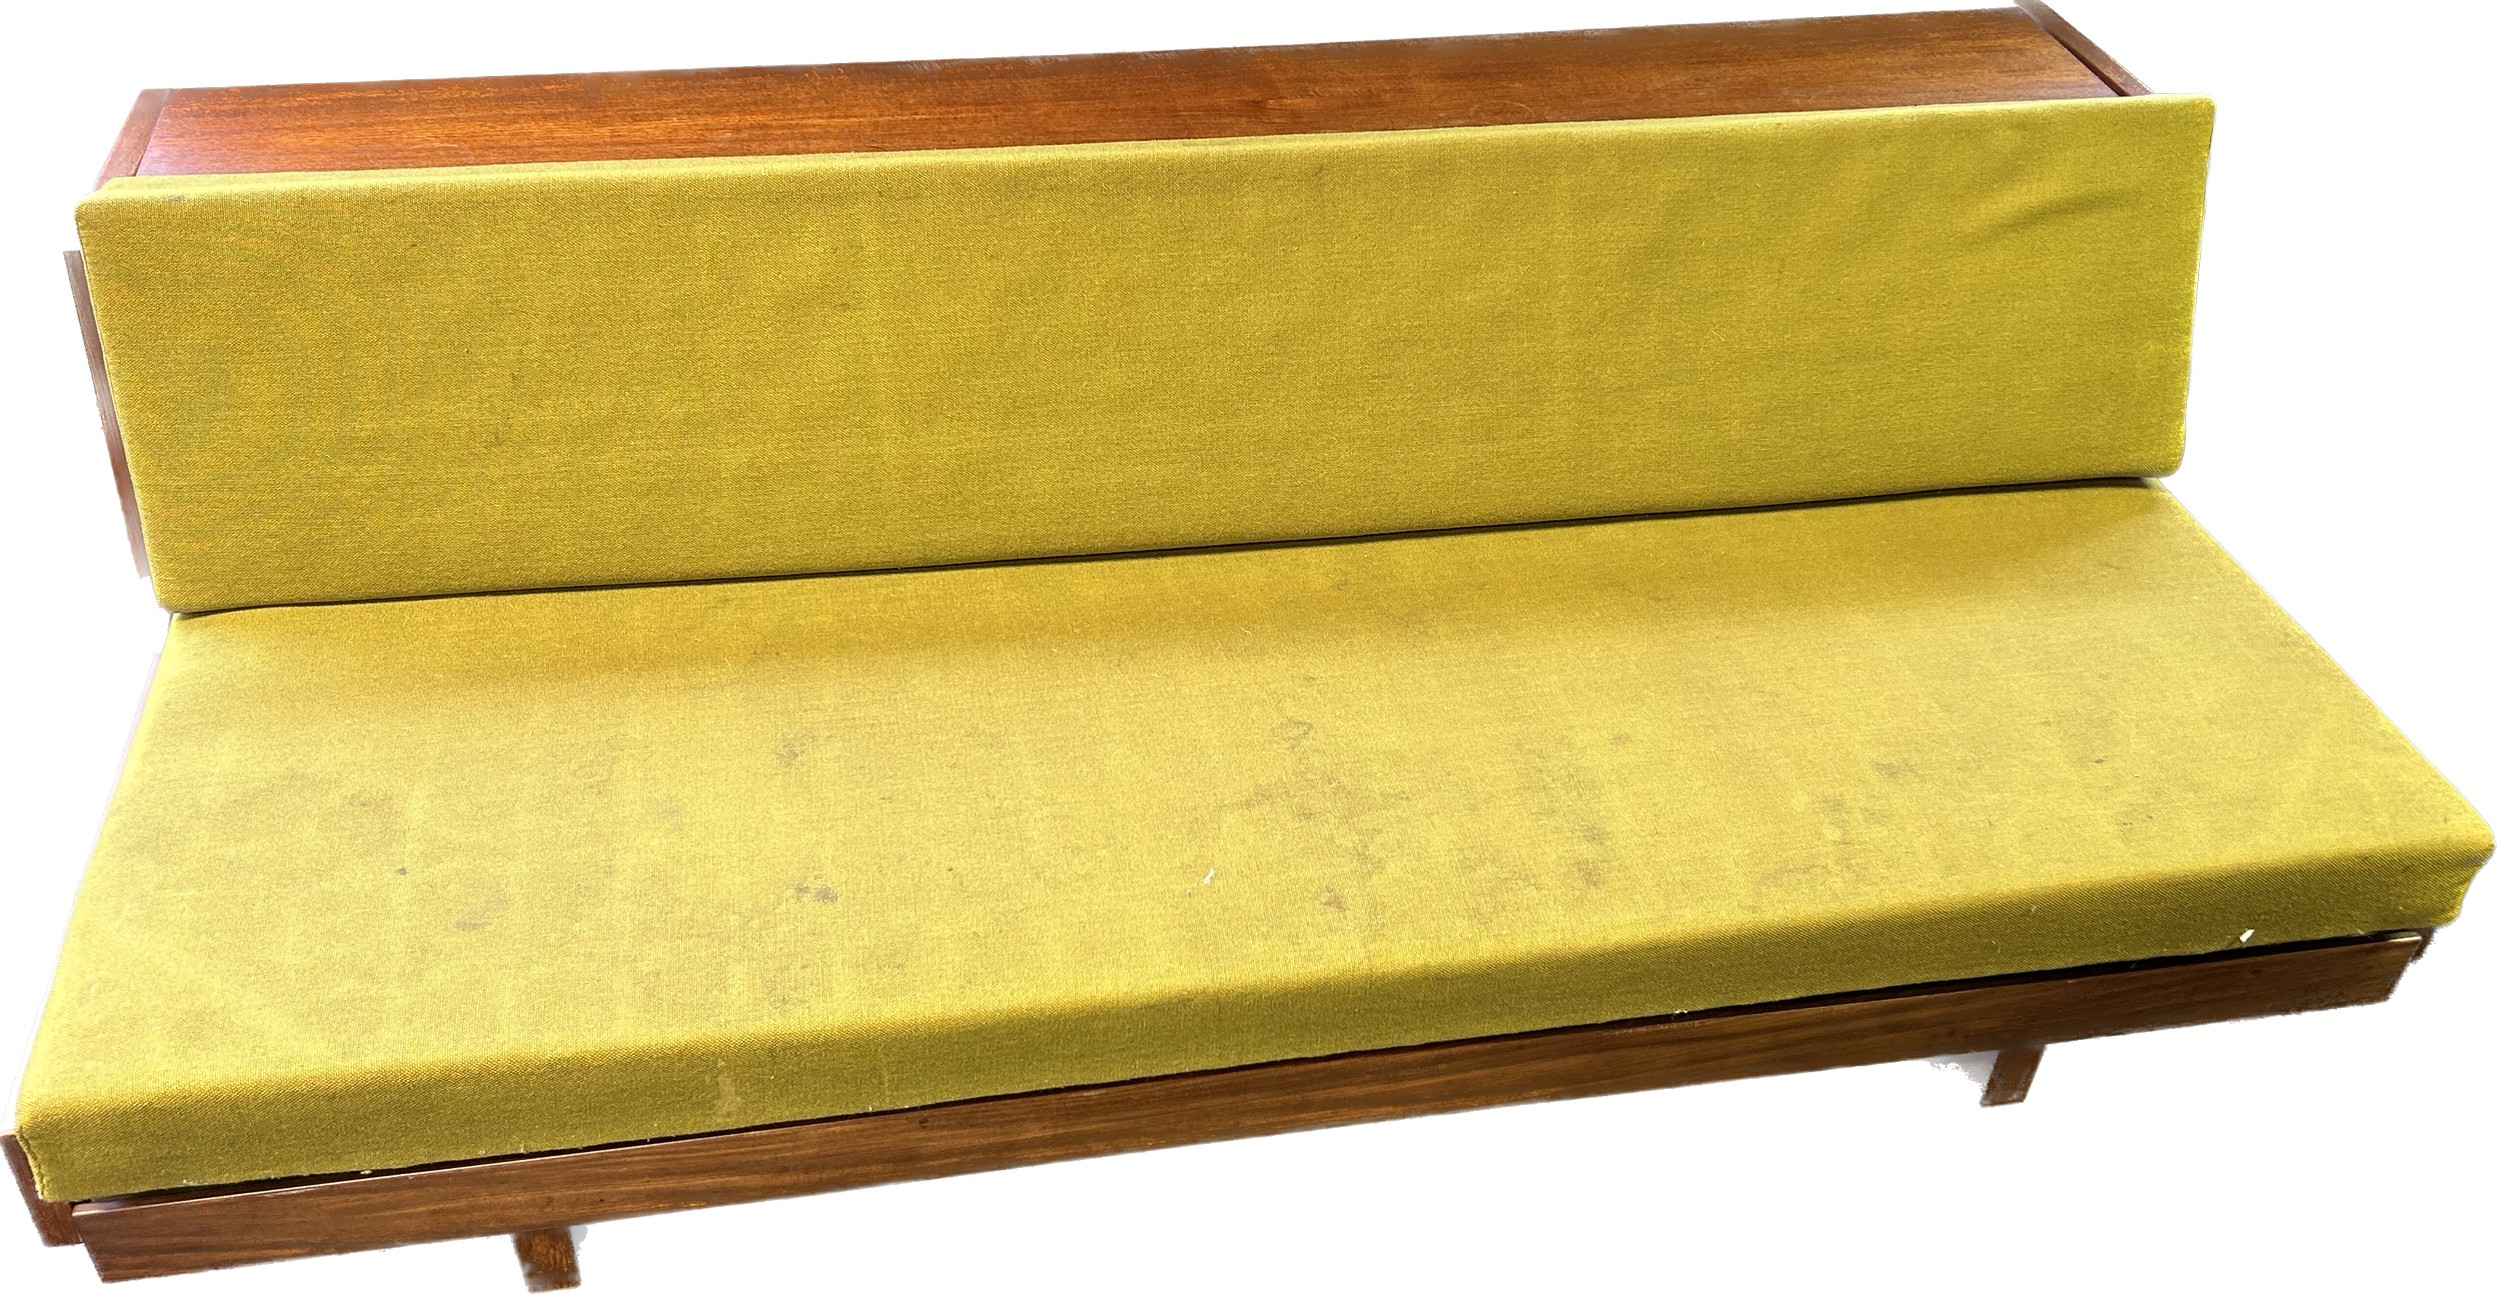 Danish Mid century sofa bed - Image 2 of 3